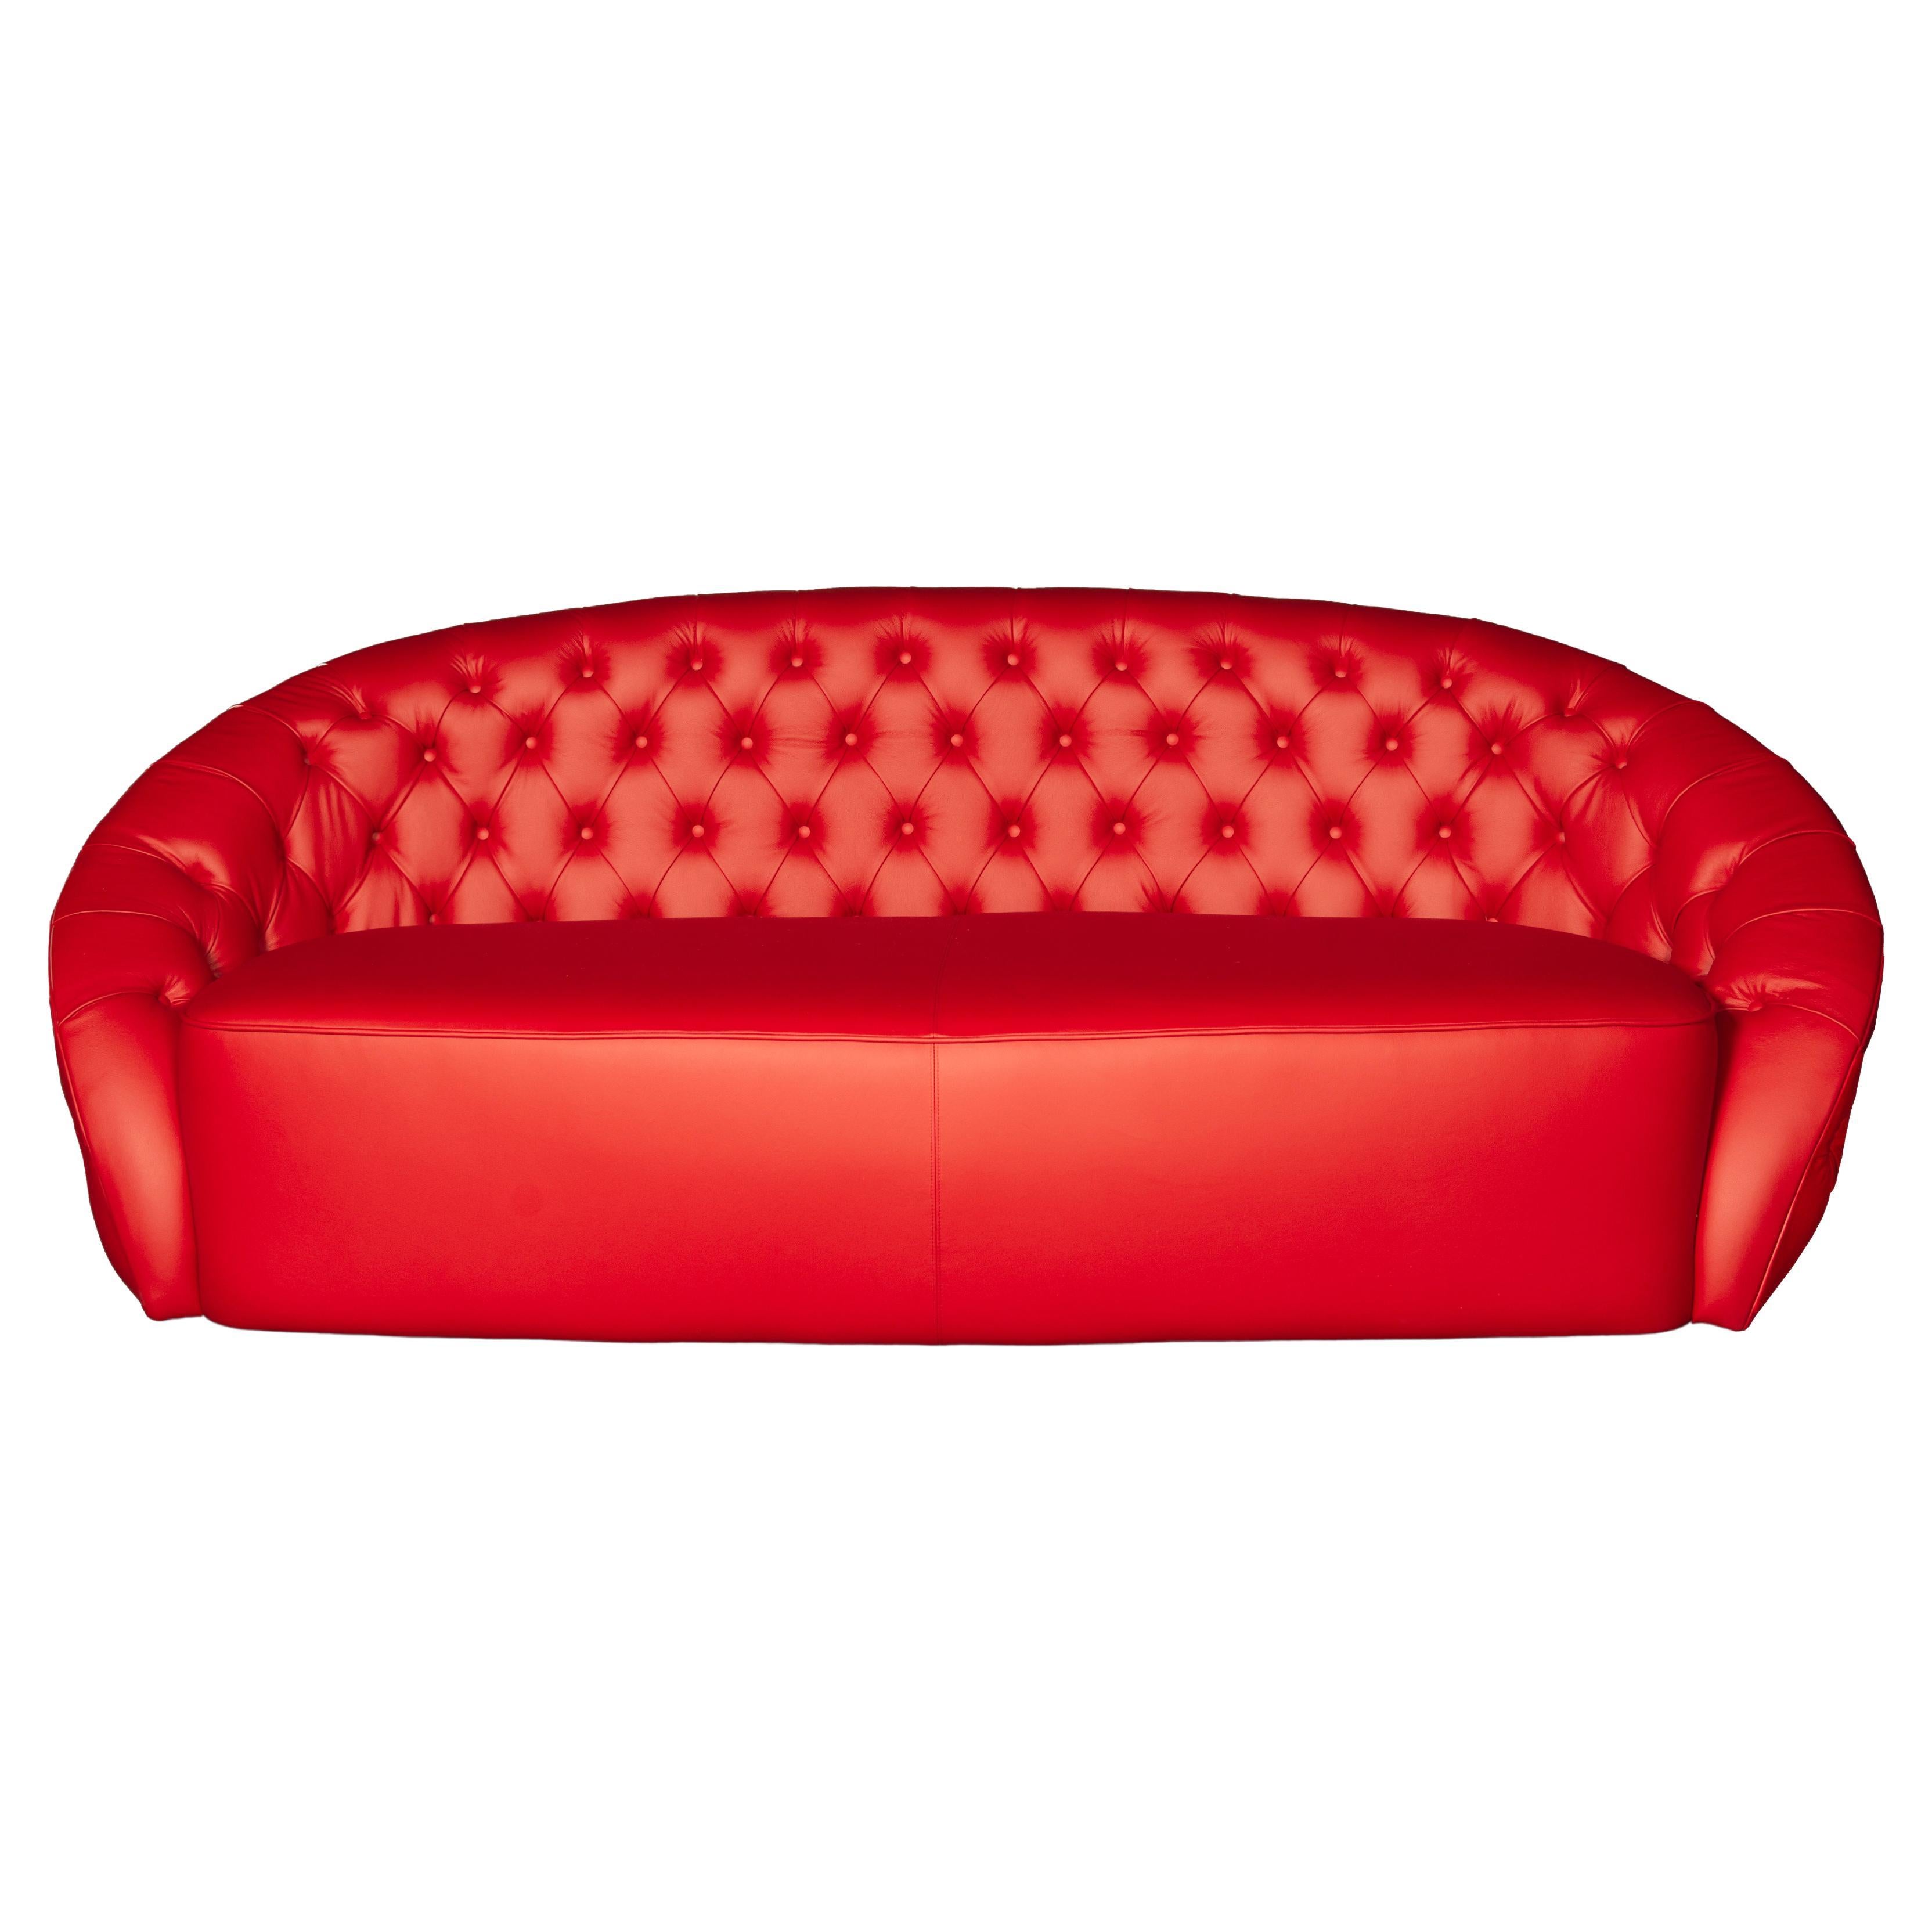 Sofa Rund Capitonné, Rotes Leder, cm 210x115, Made in Italy